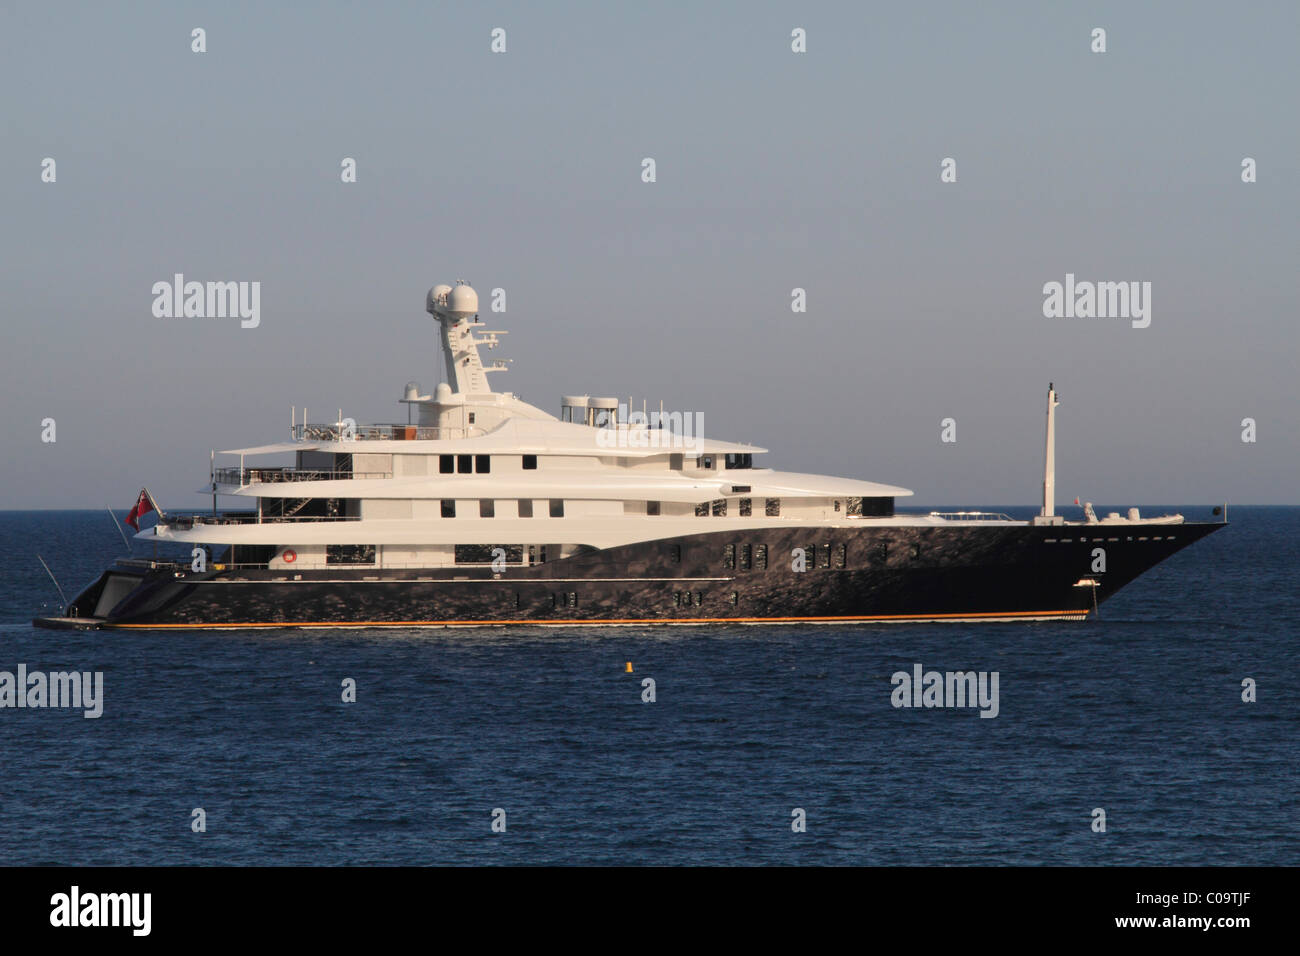 Motor yacht C2, shipyard Abeking and Rasmussen, length 78.43 metres, built in 2008, anchored off Monaco, Côte d'Azur Stock Photo